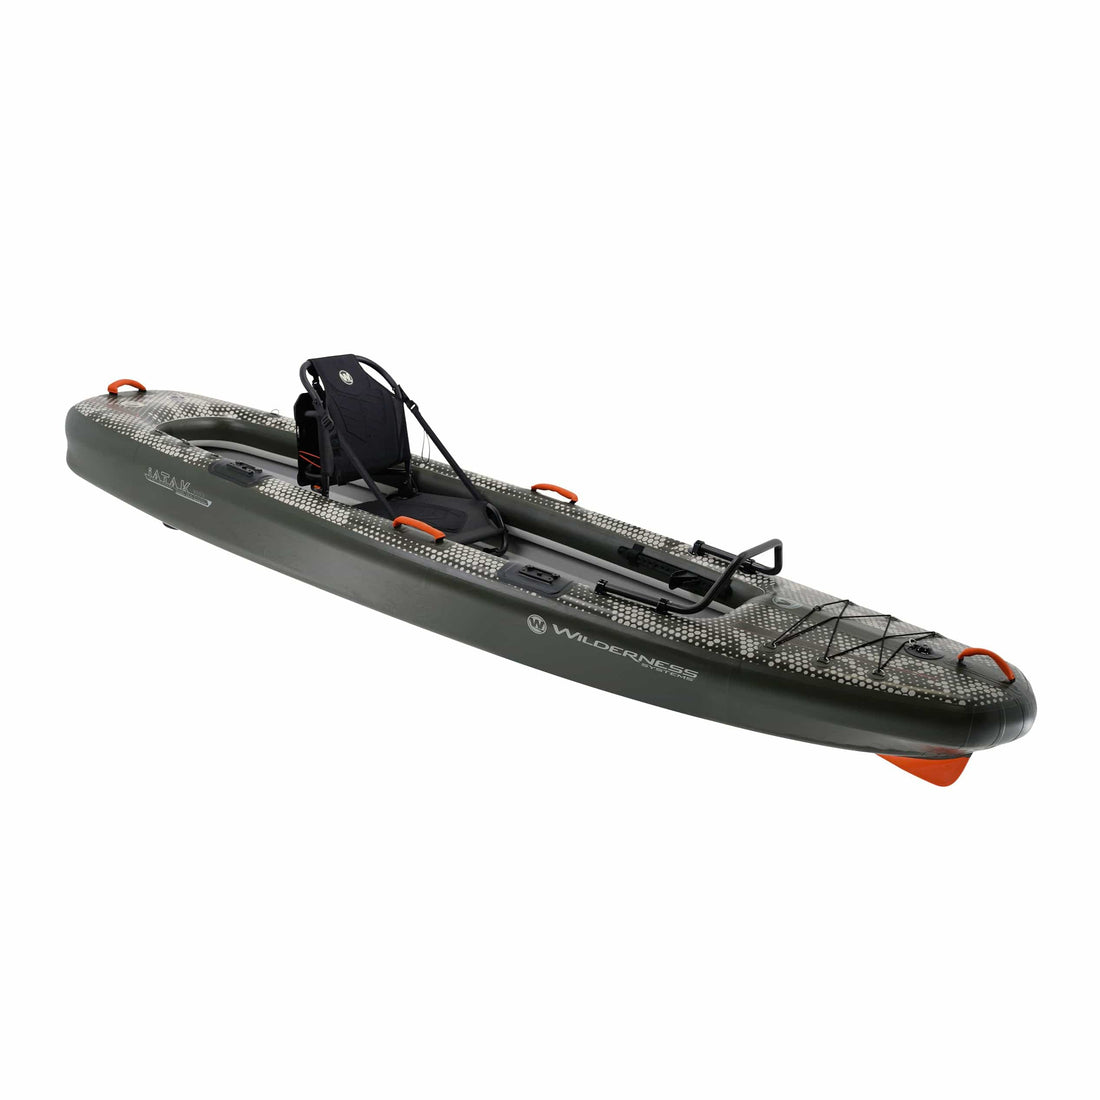 Wilderness Systems IATAK 110 Inflatable Fishing Kayak